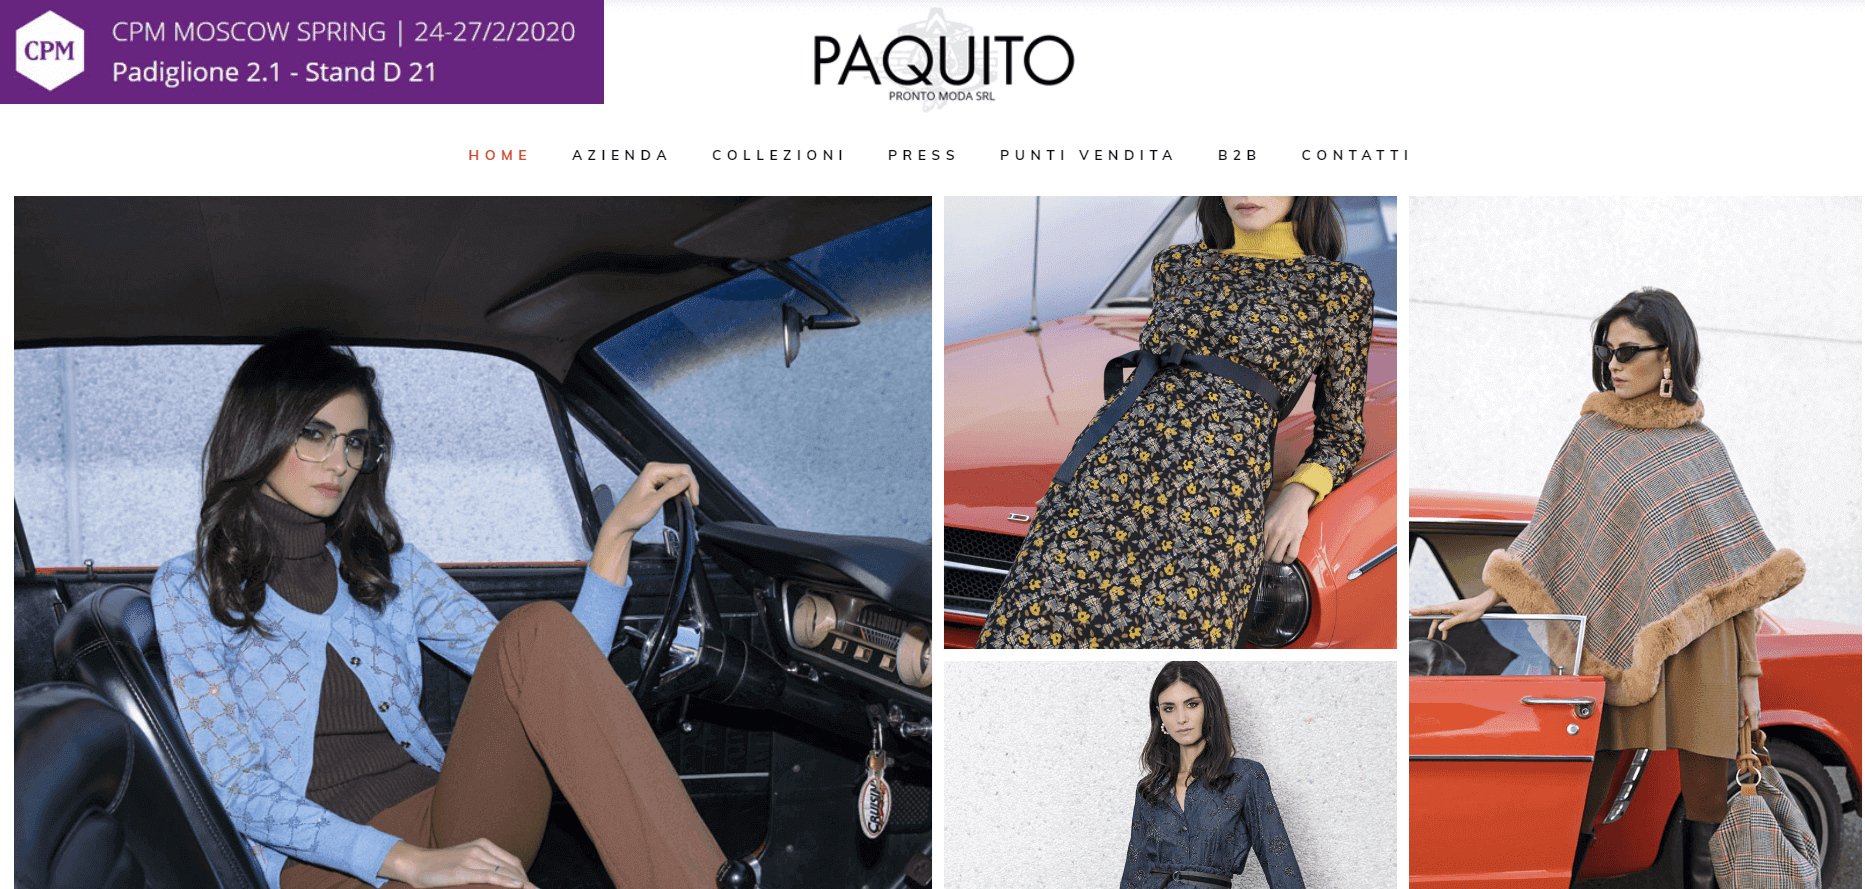 Paquito купити онлайн з доставкою в Україну - Meest Shopping - 2